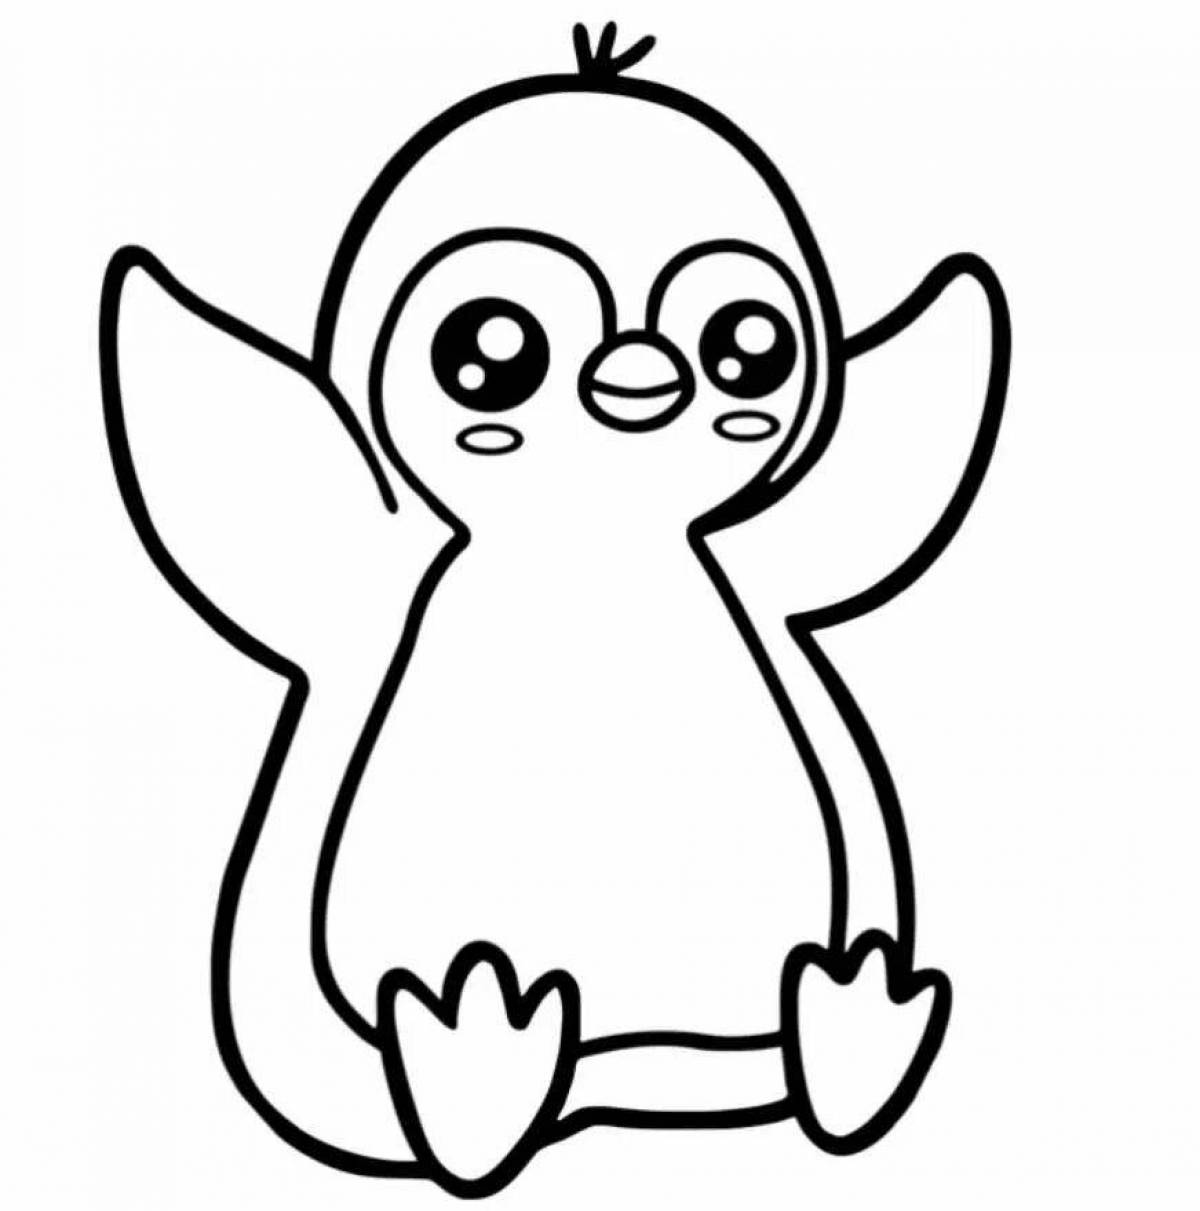 Whimsical penguin drawing for kids